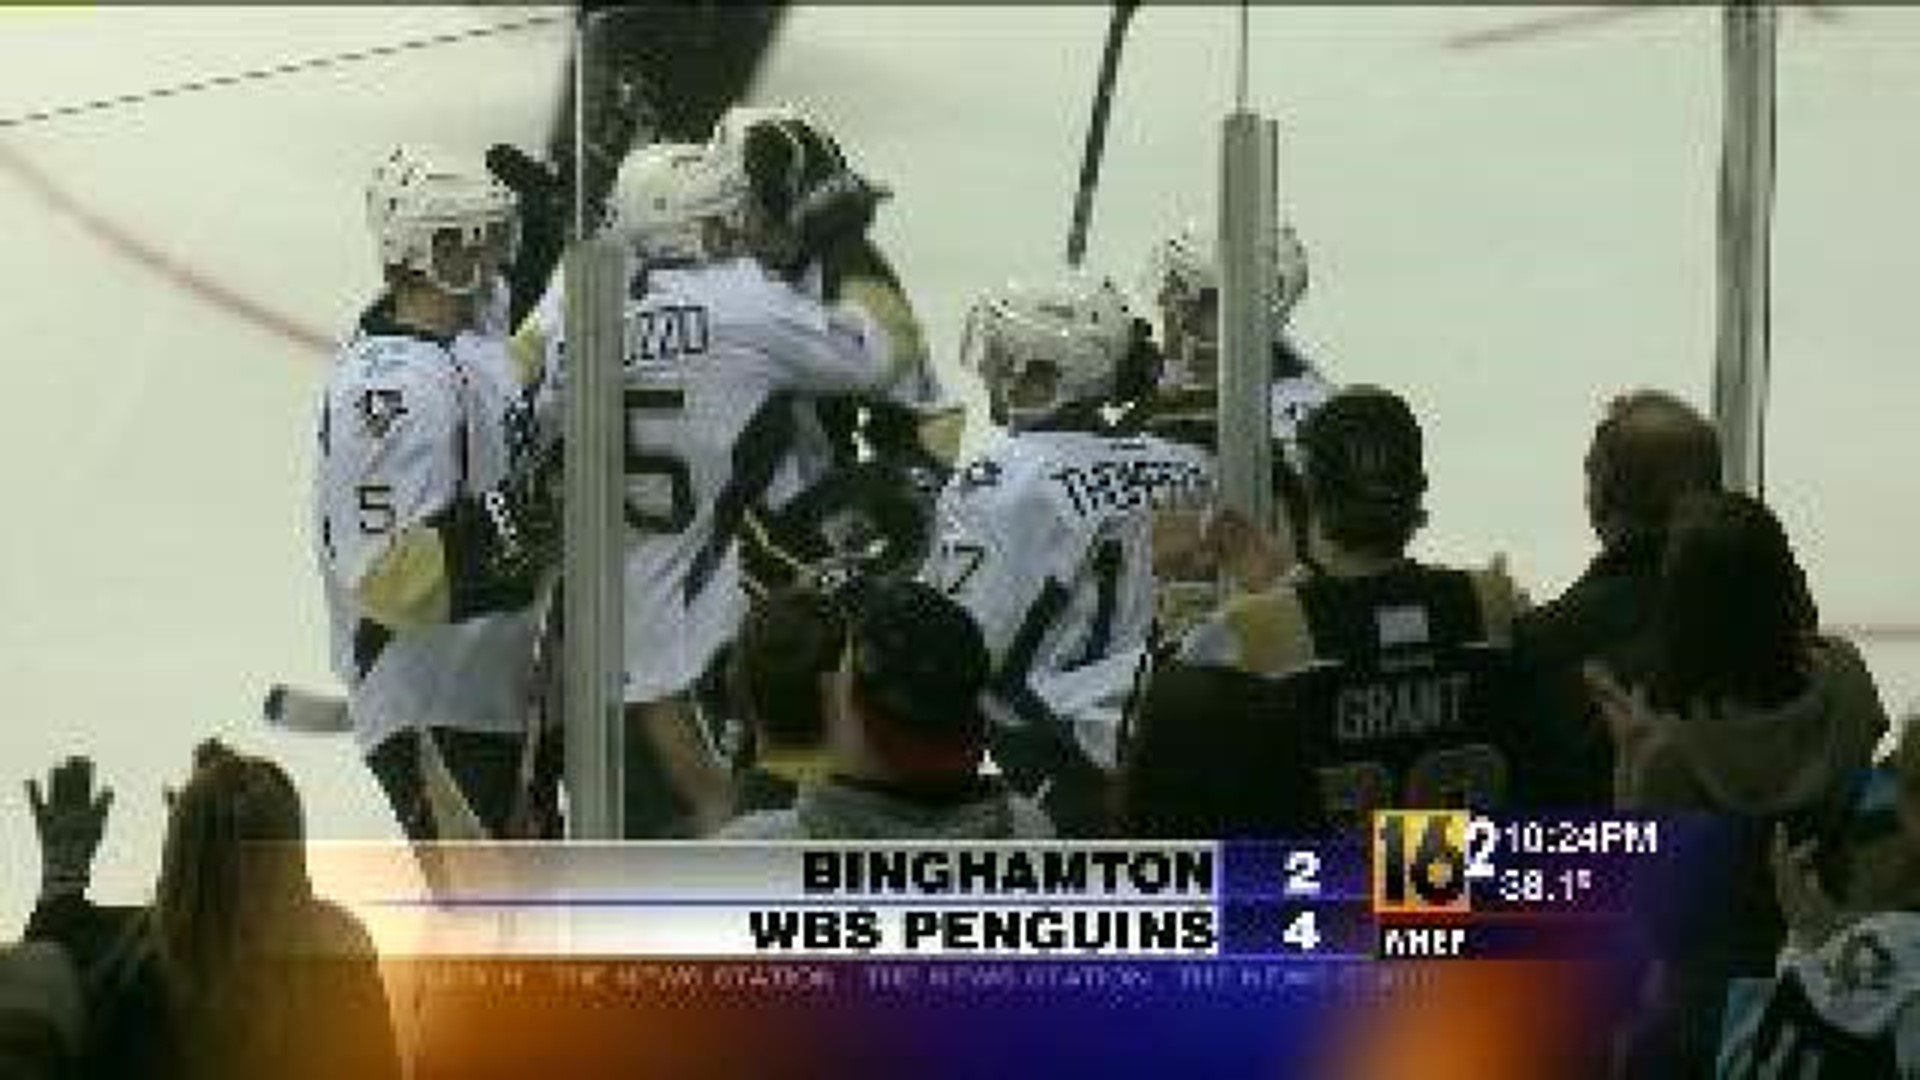 WBS Penguins 4 Binghamton 2